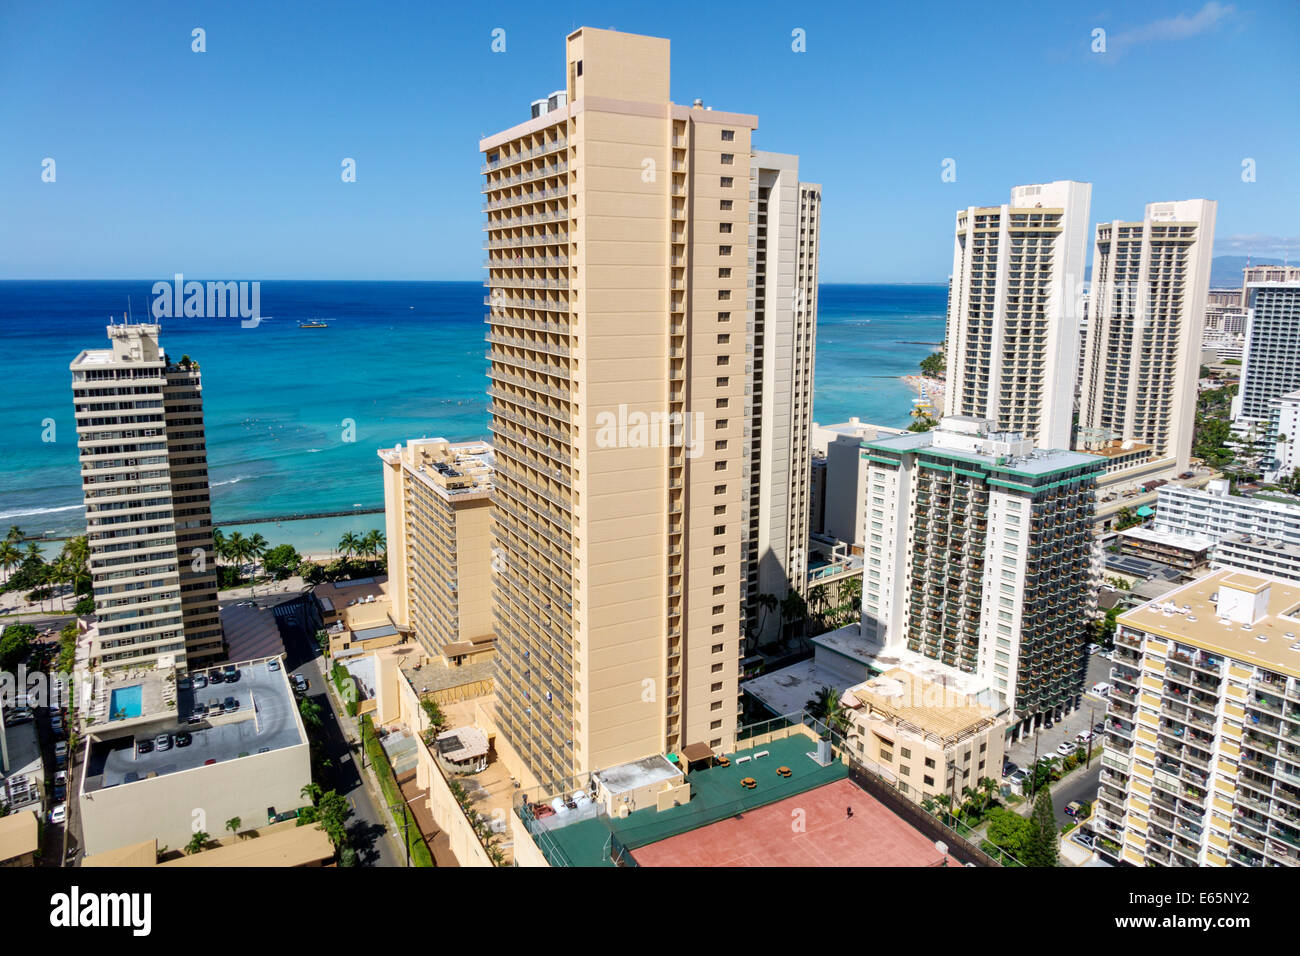 Honolulu Hawaii,Oahu,Hawaiian,Waikiki Beach,Pacific Ocean,resort,high rise,building,hotels,condominium buildings,USA,US,United,States,America Polynesi Stock Photo